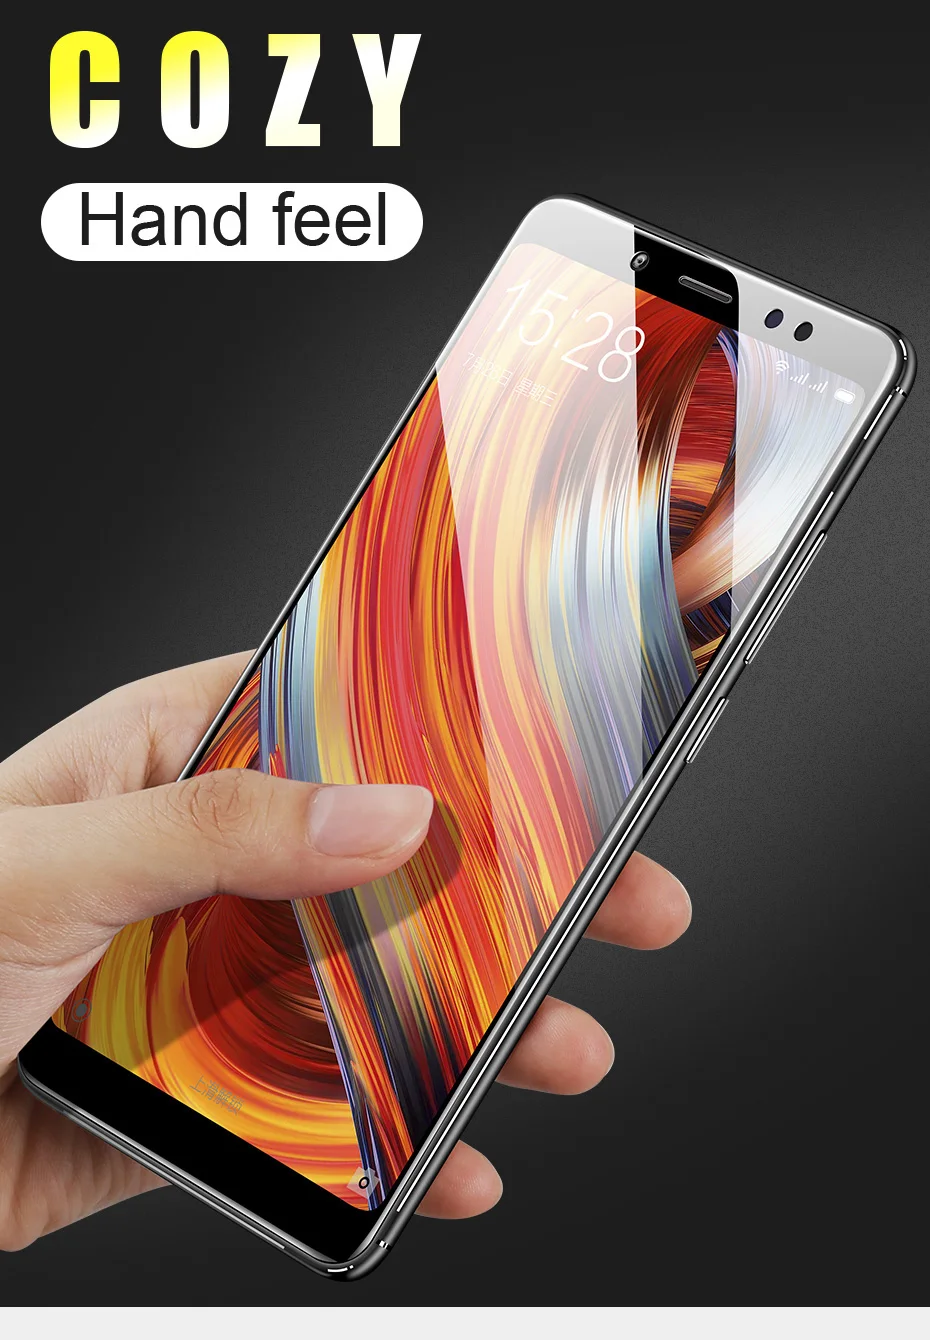 9D защита экрана из закаленного стекла для Xiaomi Redmi Note 6 5 pro Redmi 6 Pro 6A 4x 5A Защитное стекло для Redmi 5 Plus S2 пленка